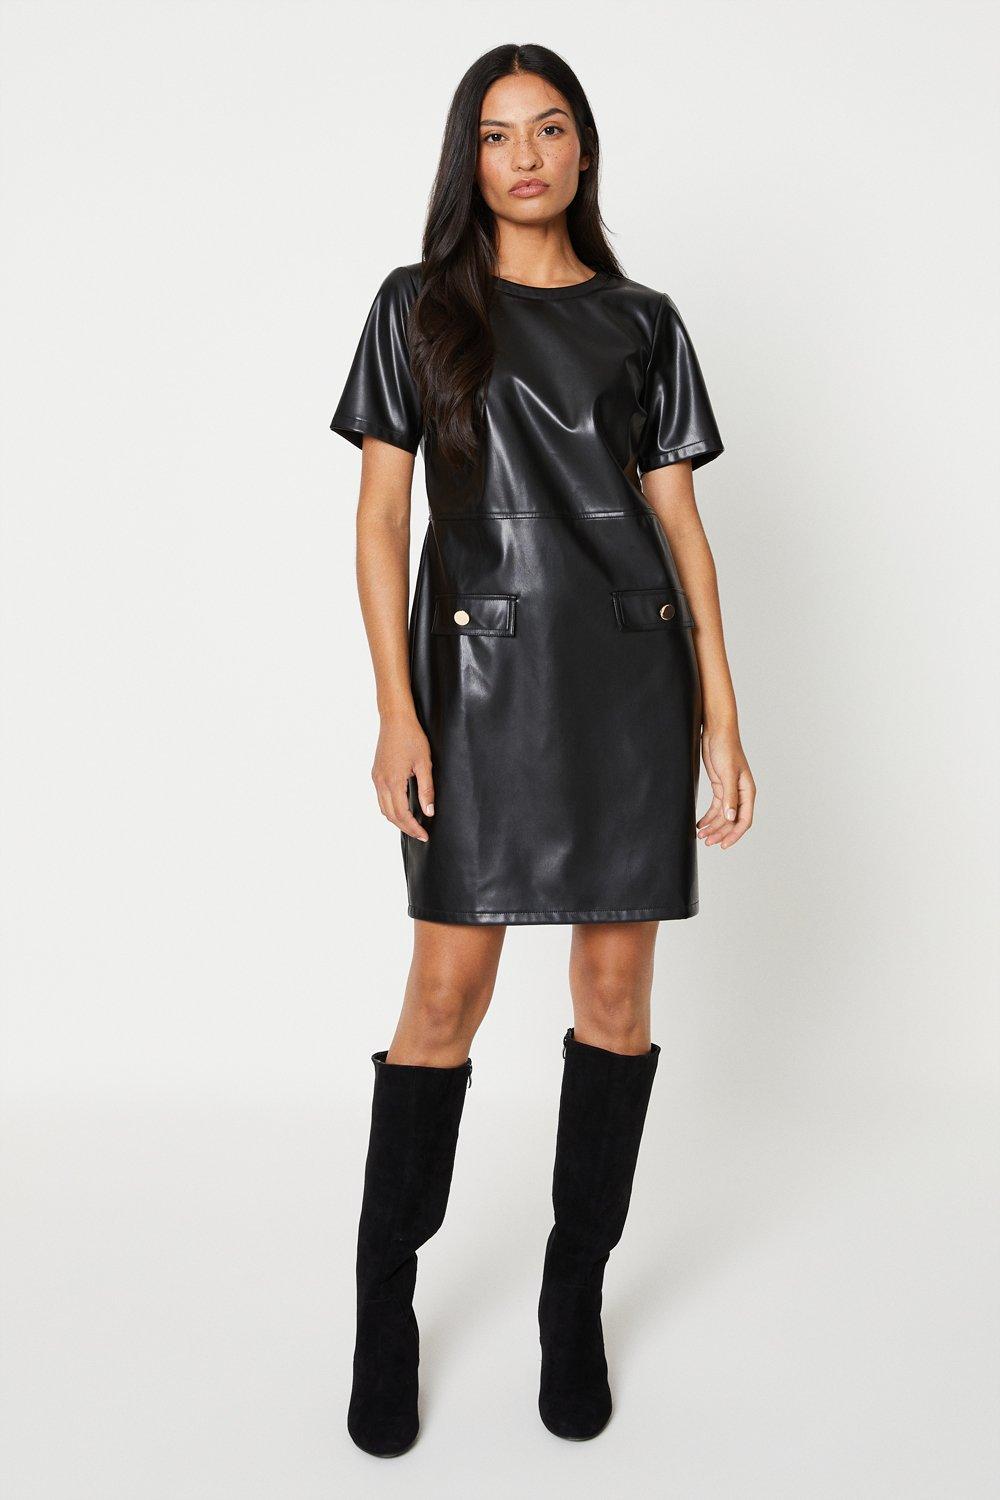 Women’s Short Sleeve Pocket Front Pu Dress - black - 12